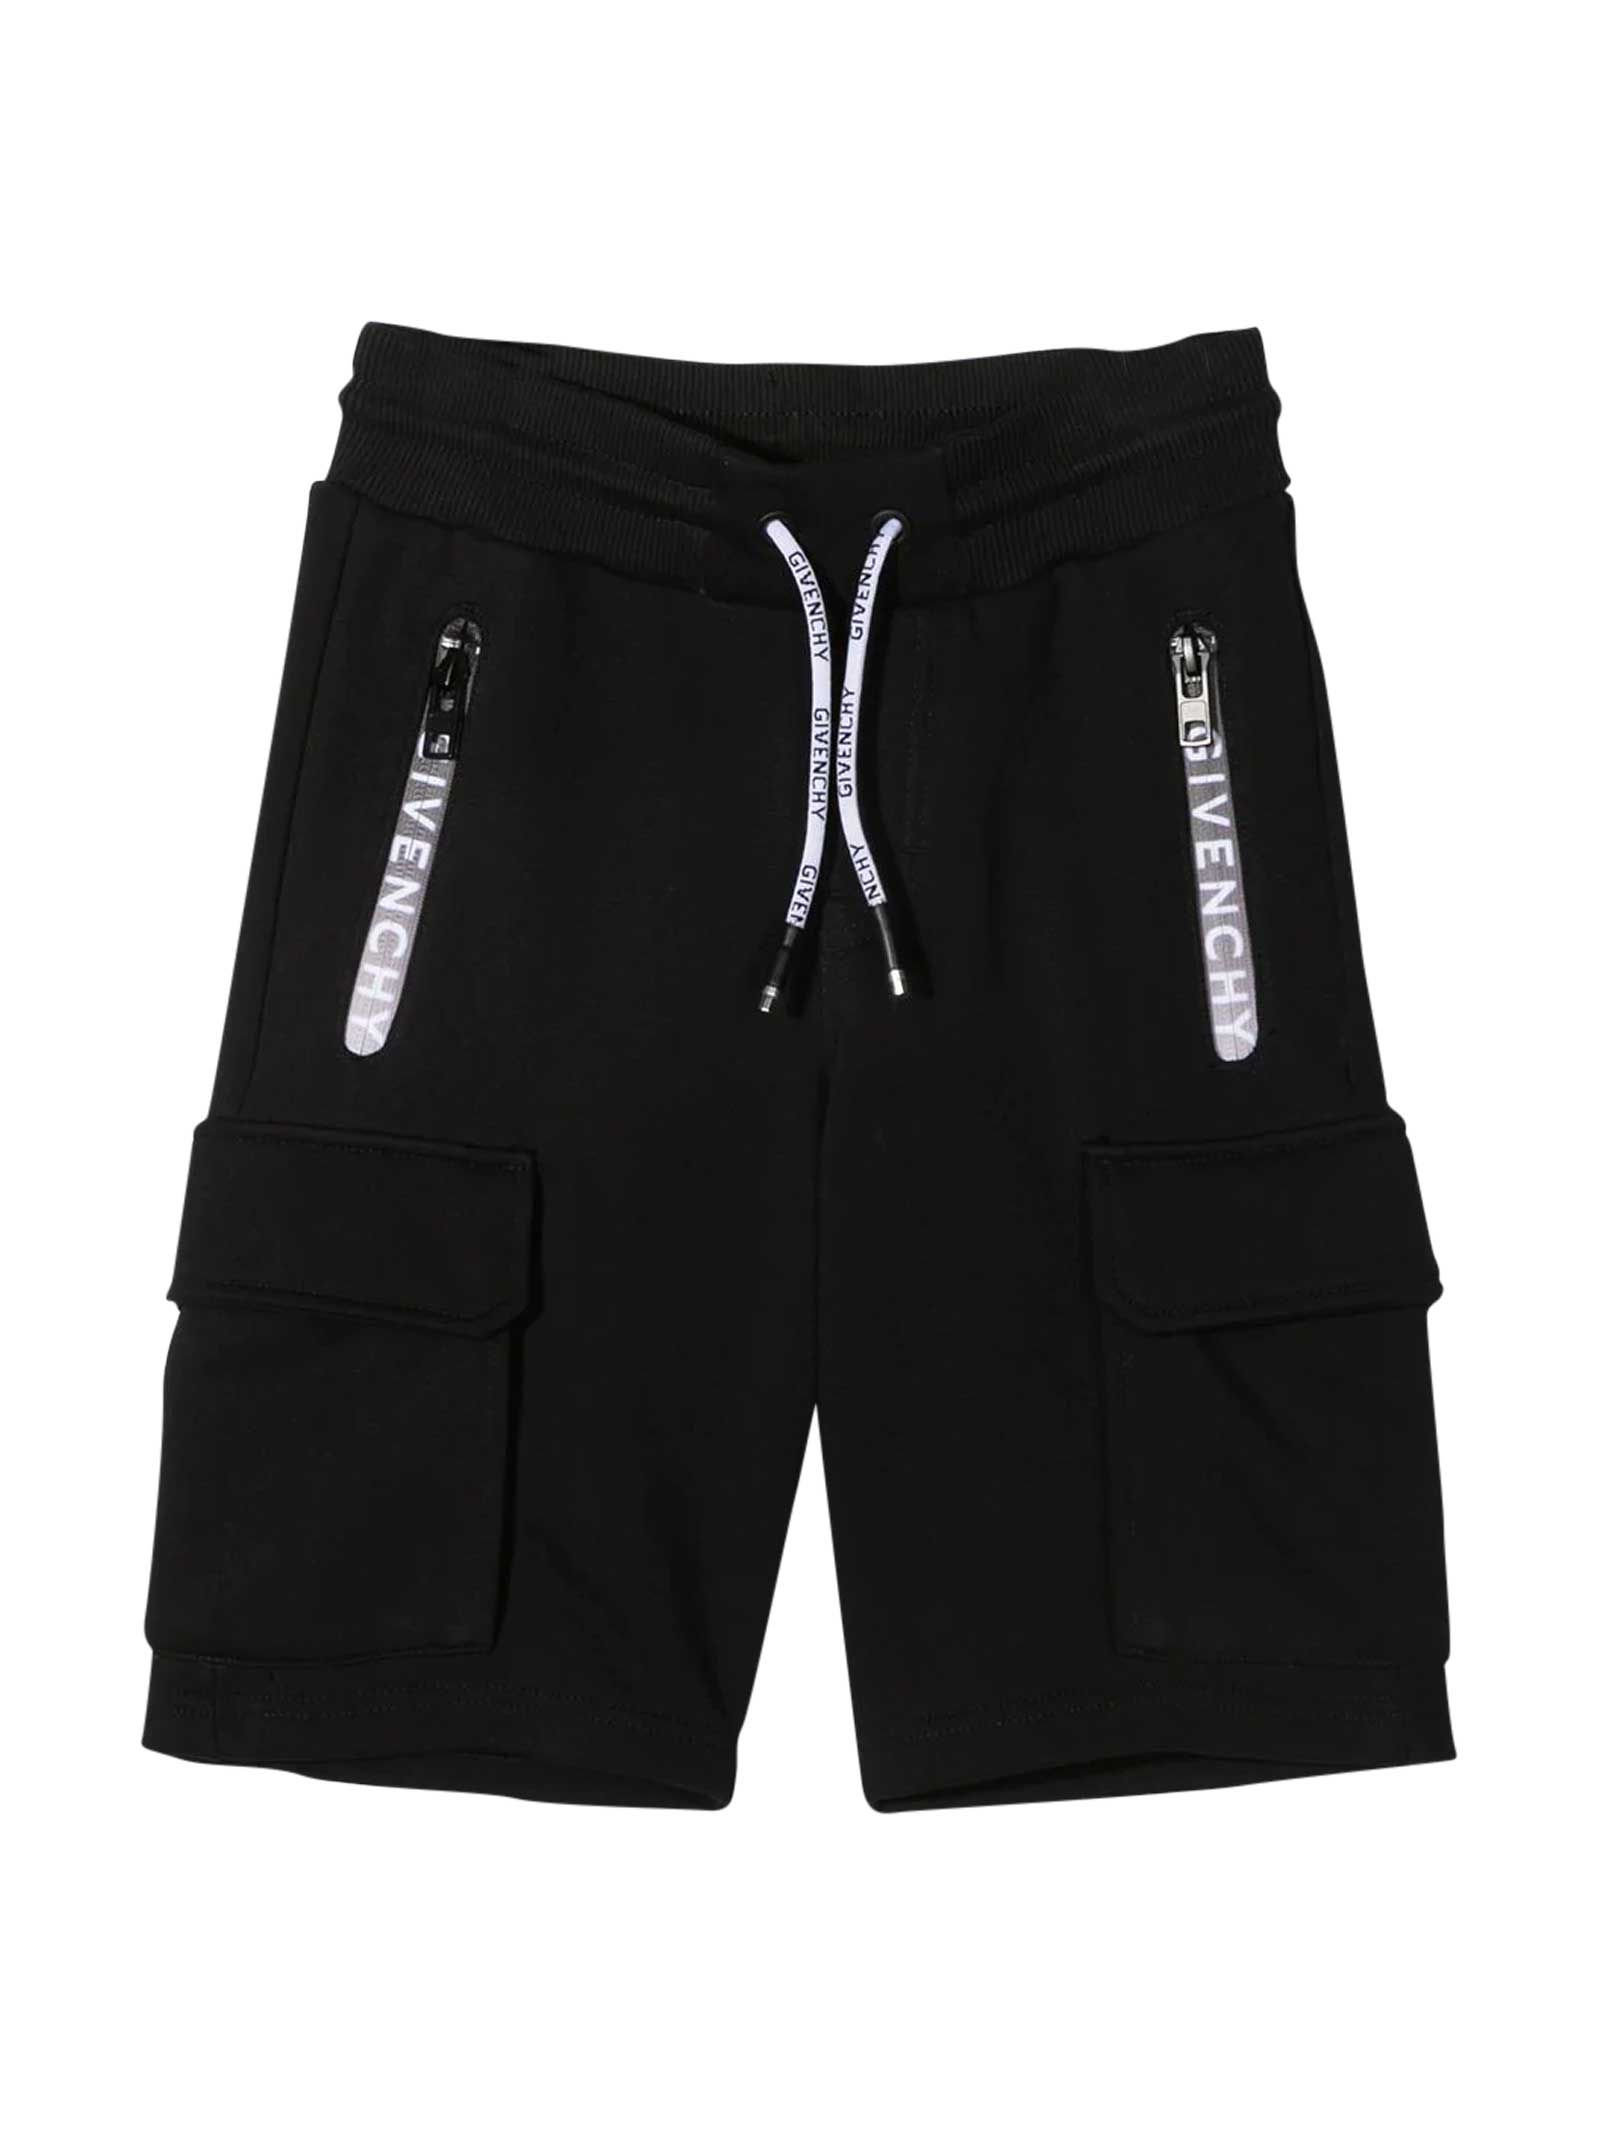 Givenchy Black Sporty Shorts